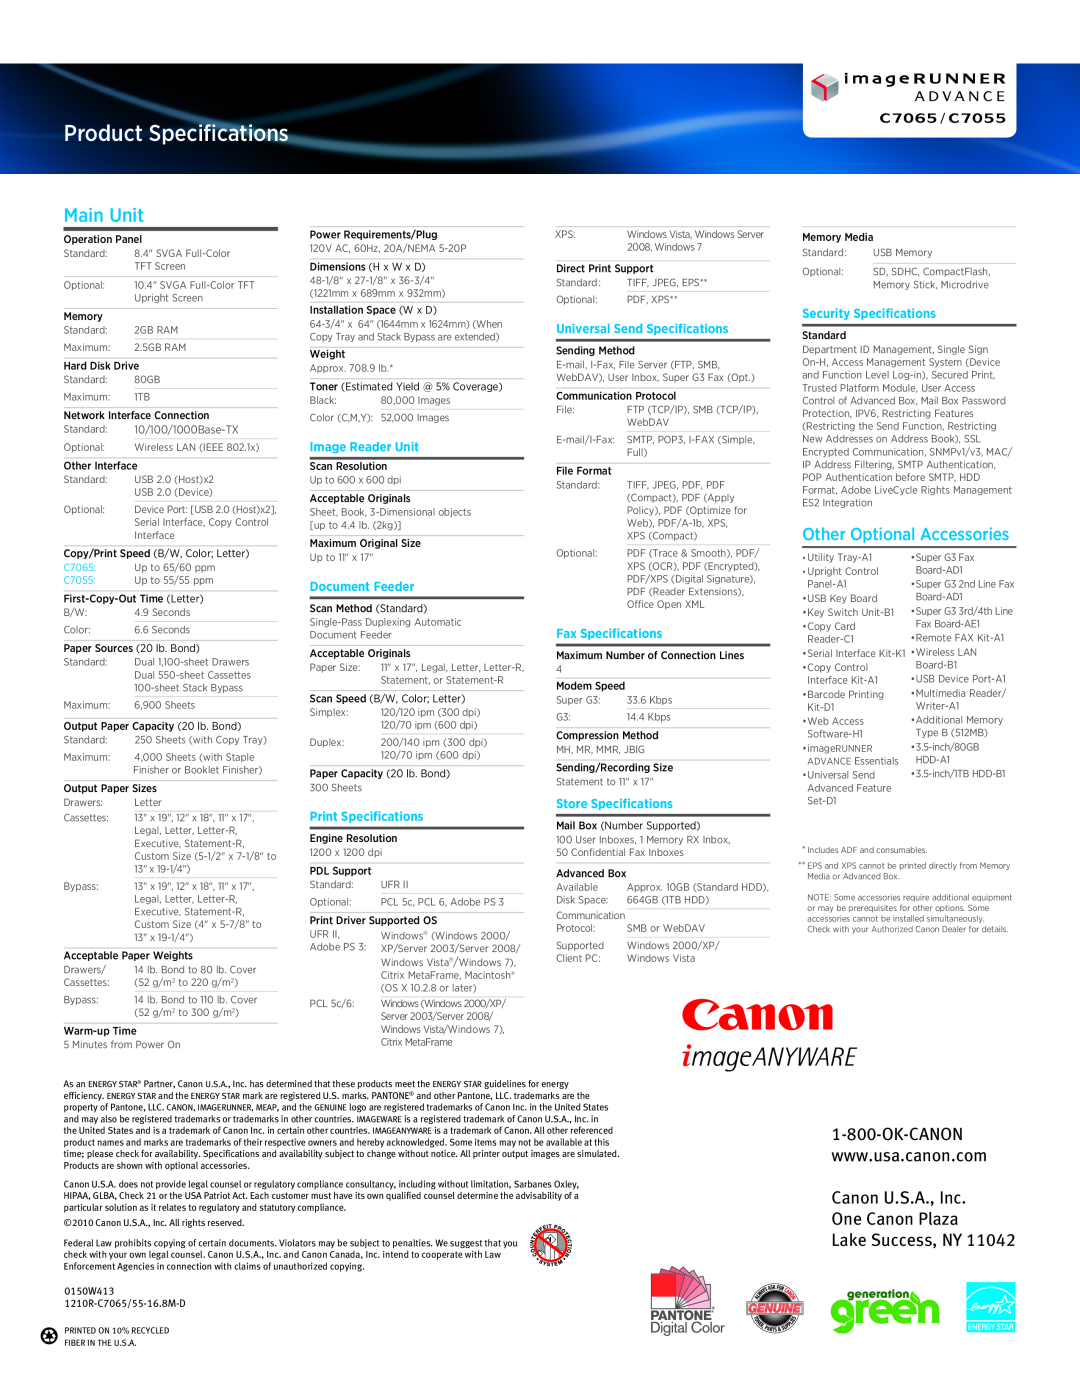 Canon C7055 manual Main Unit, Canon U.S.A., Inc One Canon Plaza Lake Success, NY, Product Specifications, Image Reader Unit 